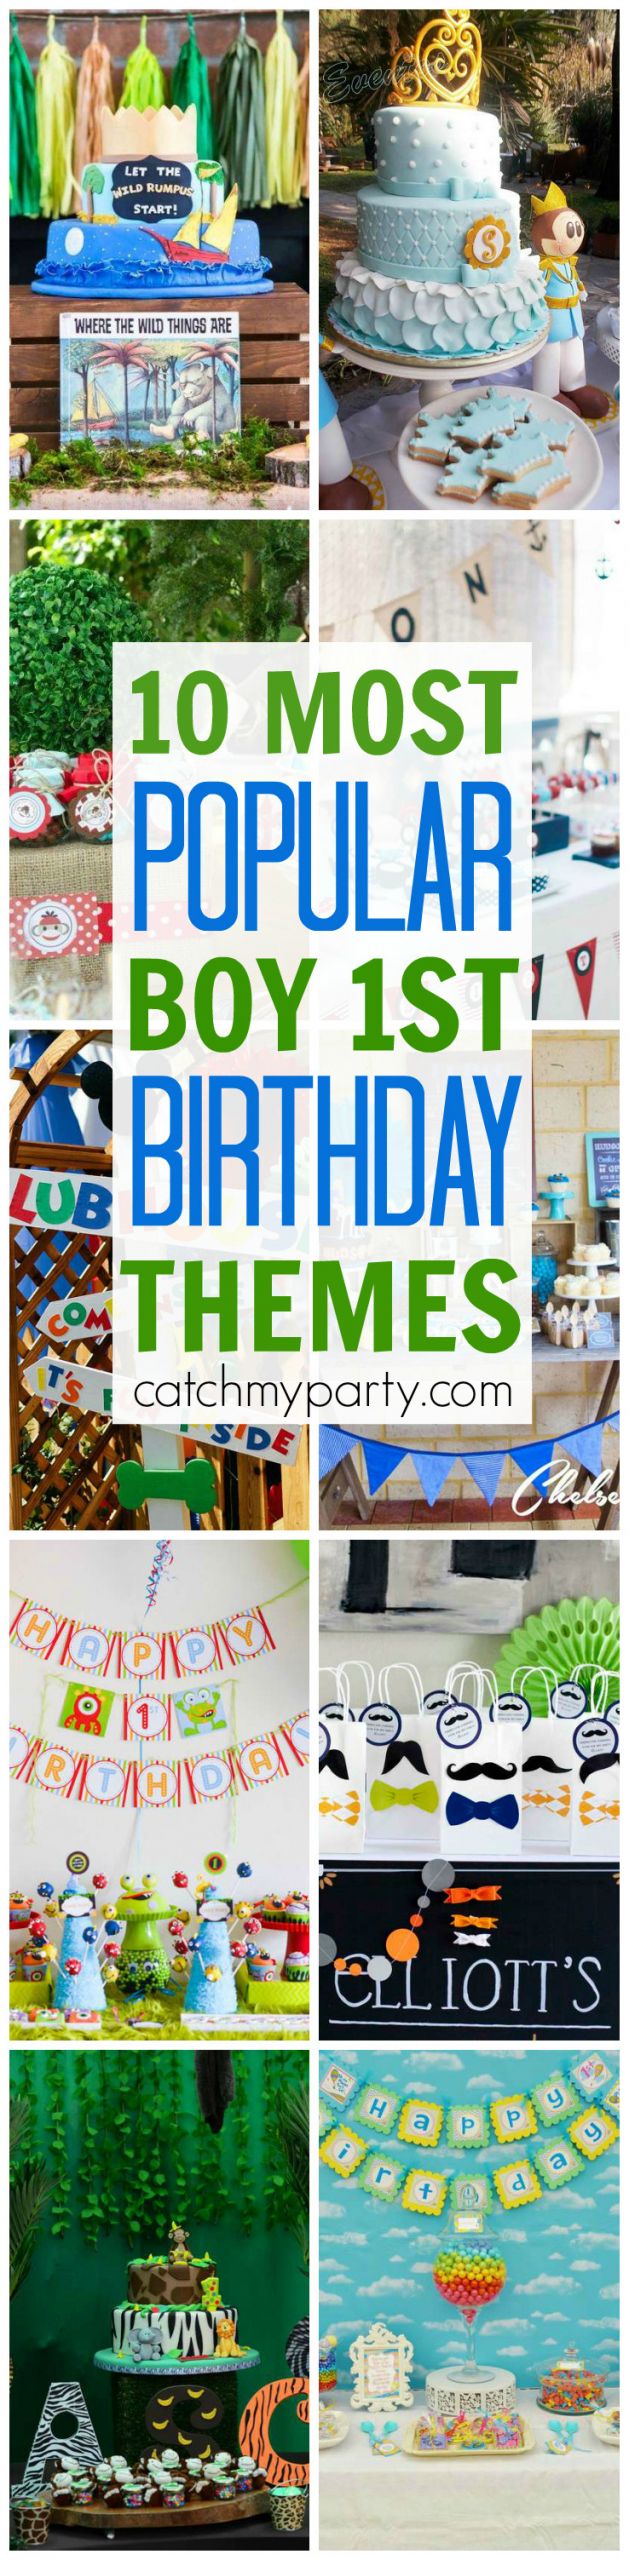 Boys Birthday Party Themes
 10 Most Popular Boy 1st Birthday Party Themes